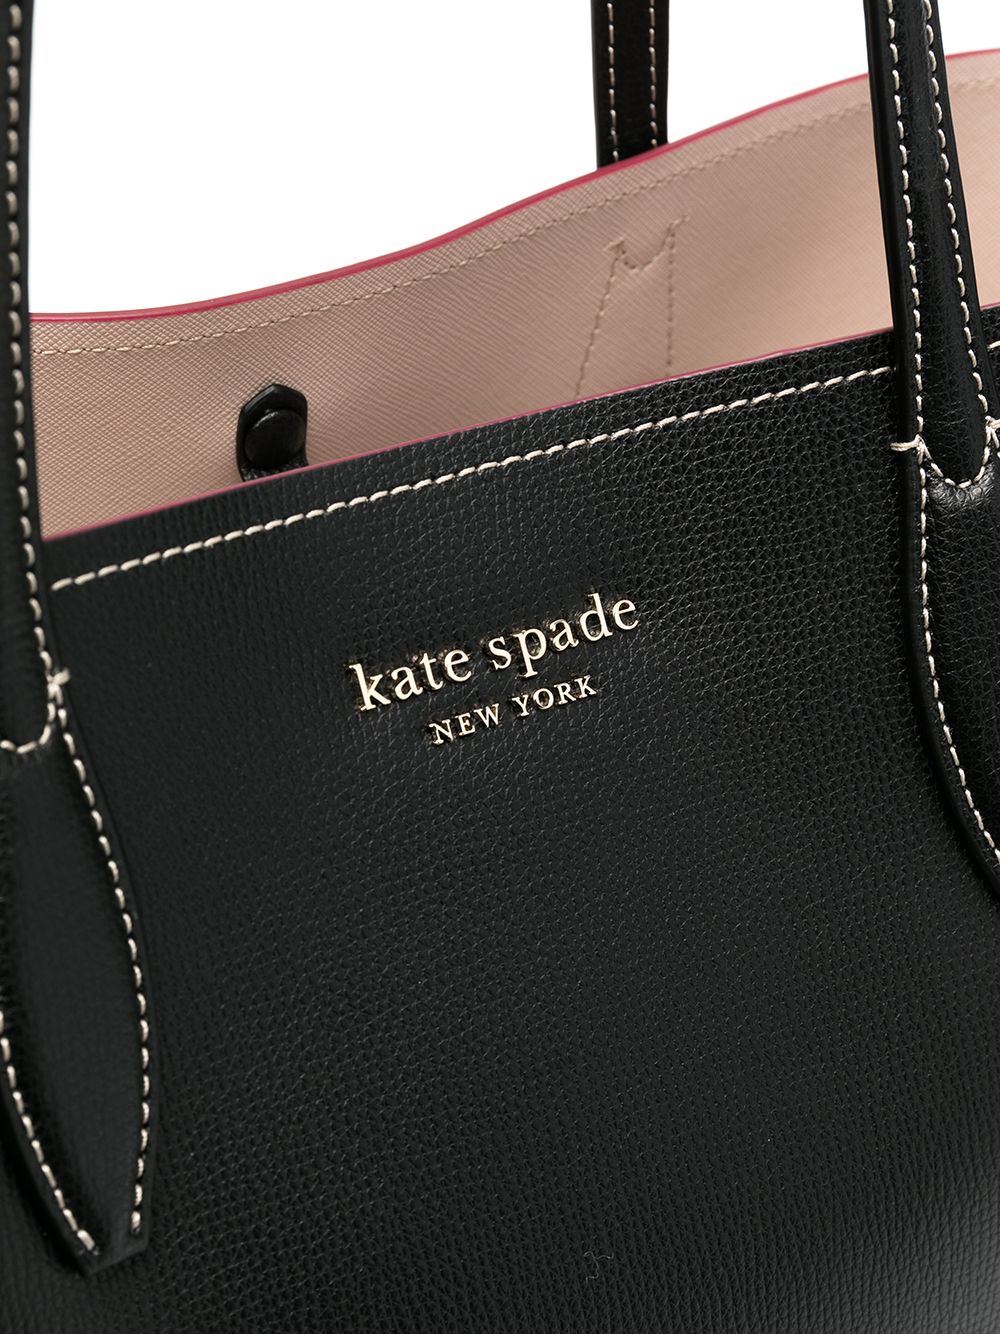 Kate Spade New York Lori Tote Black : Clothing  